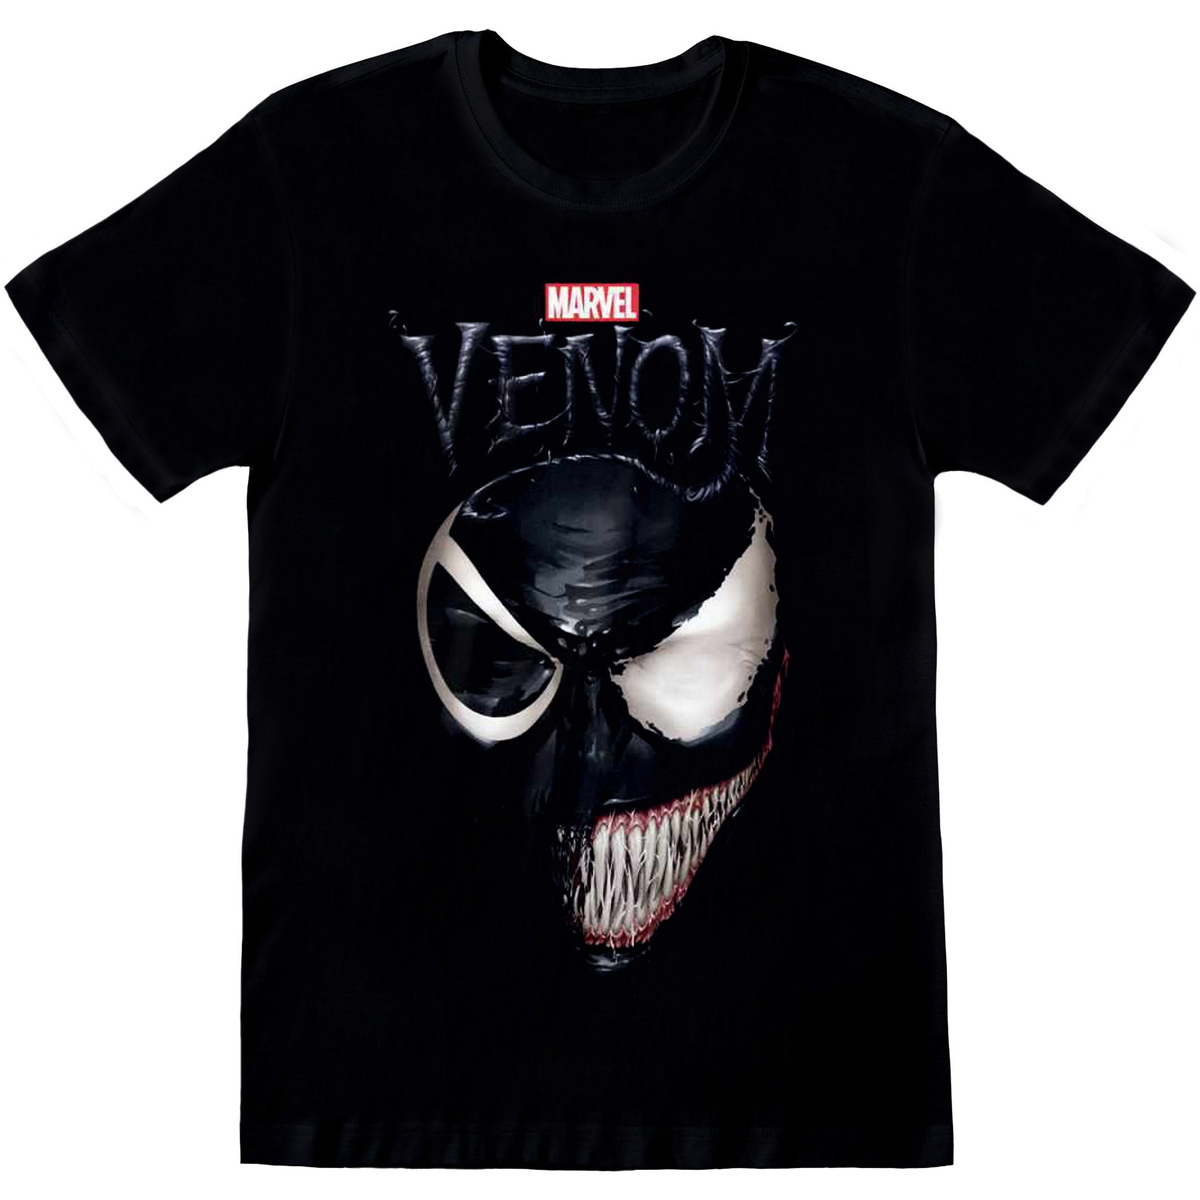 Vêtements Belstaff logo patch crewneck sweatshirt Venom  Noir